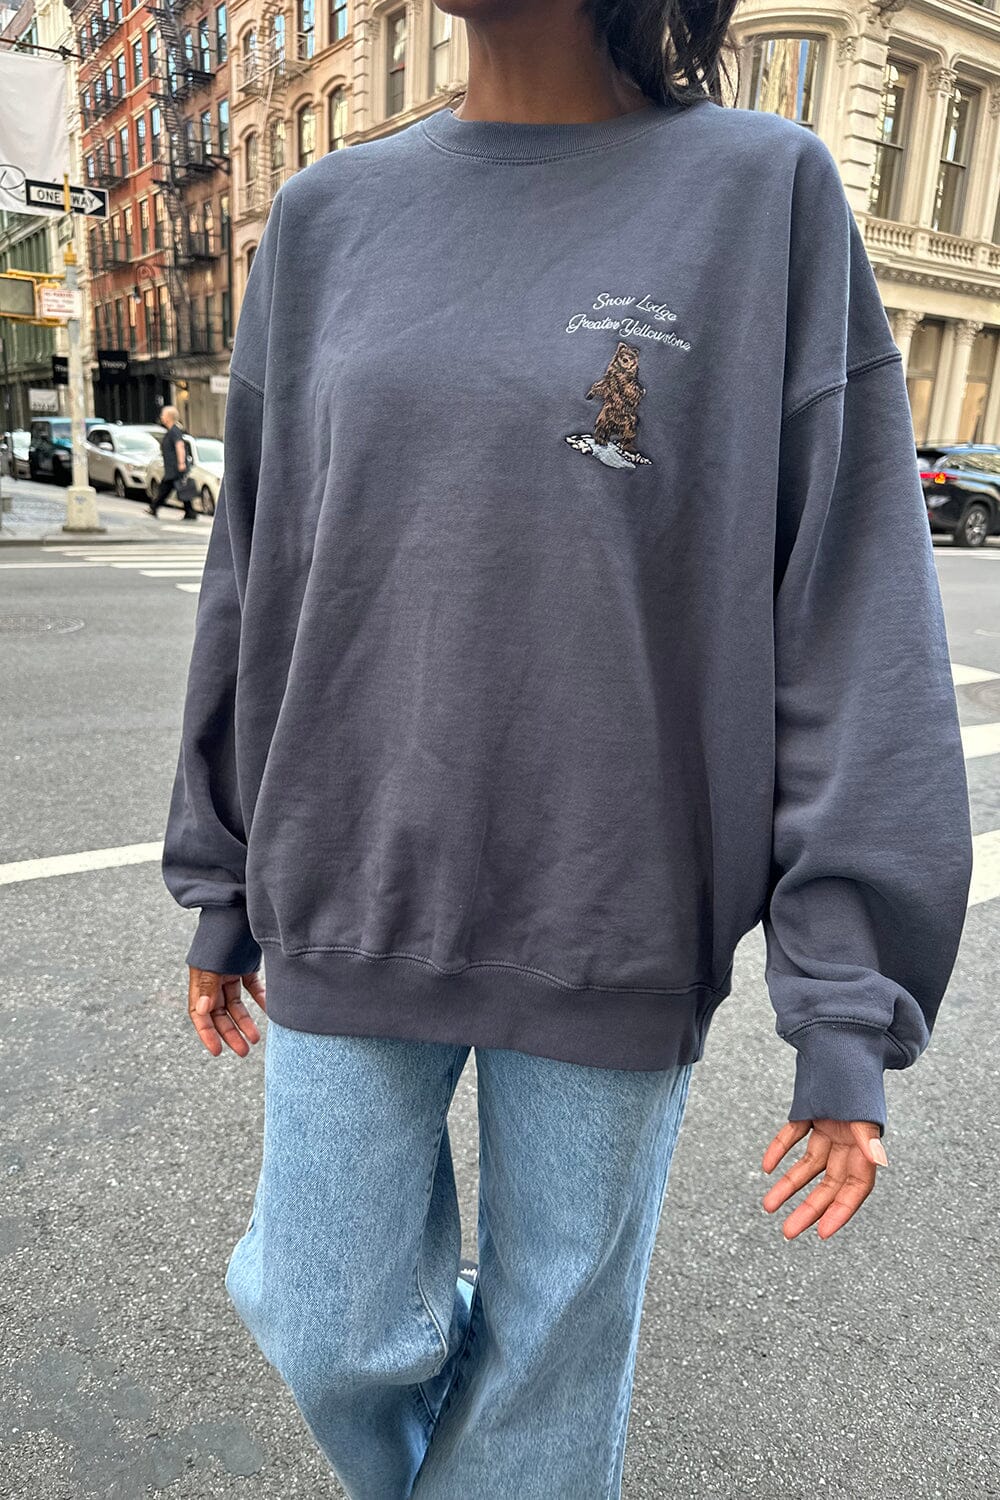  Brandy Melville Sweatshirt